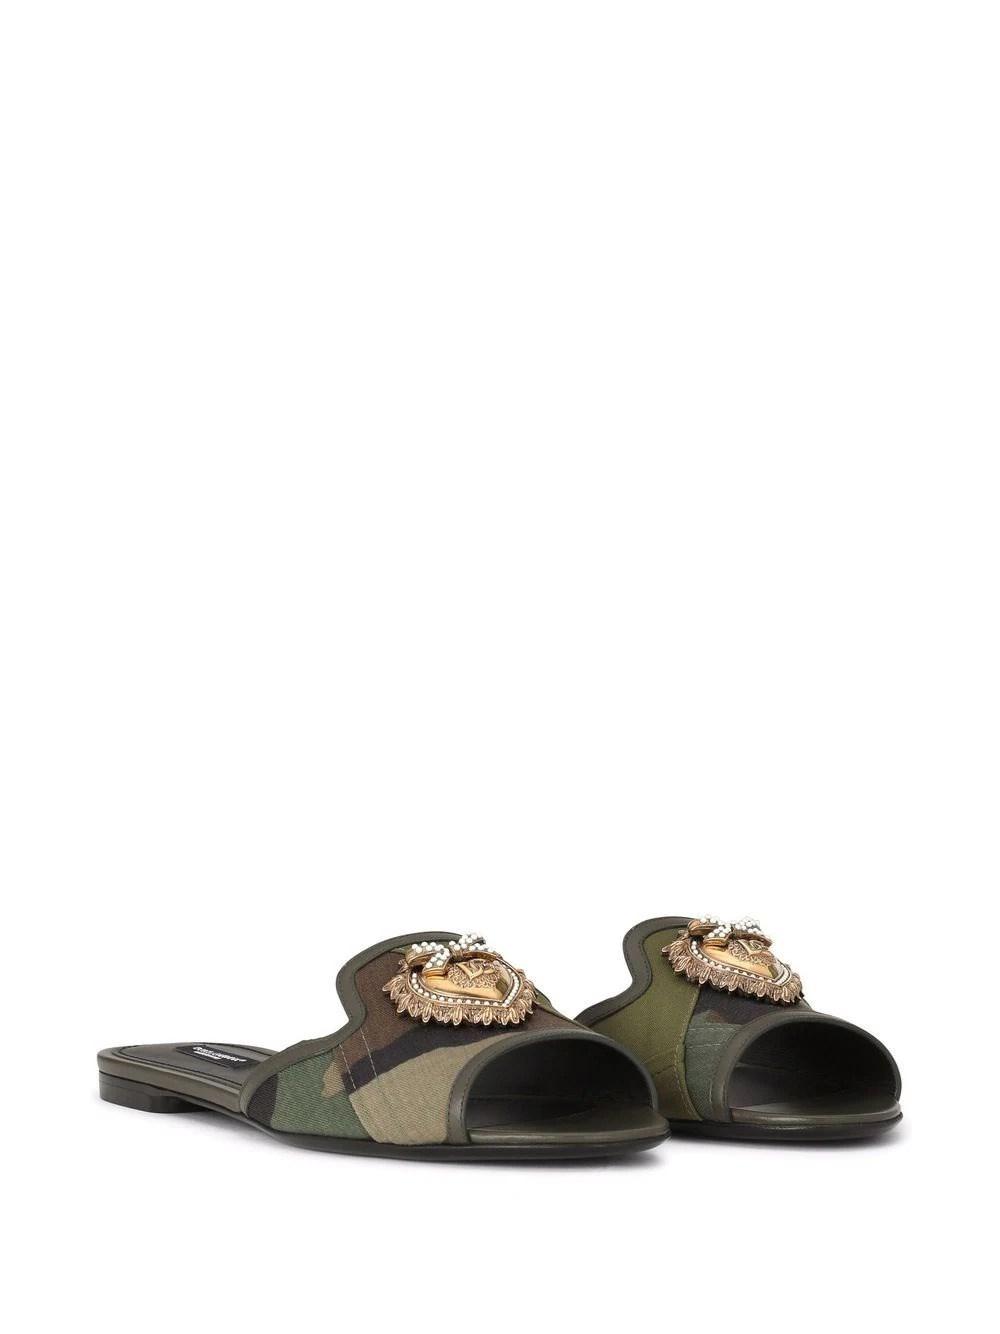 Dolce & Gabbana Leather Camouflage Flat Sandal - Lyst